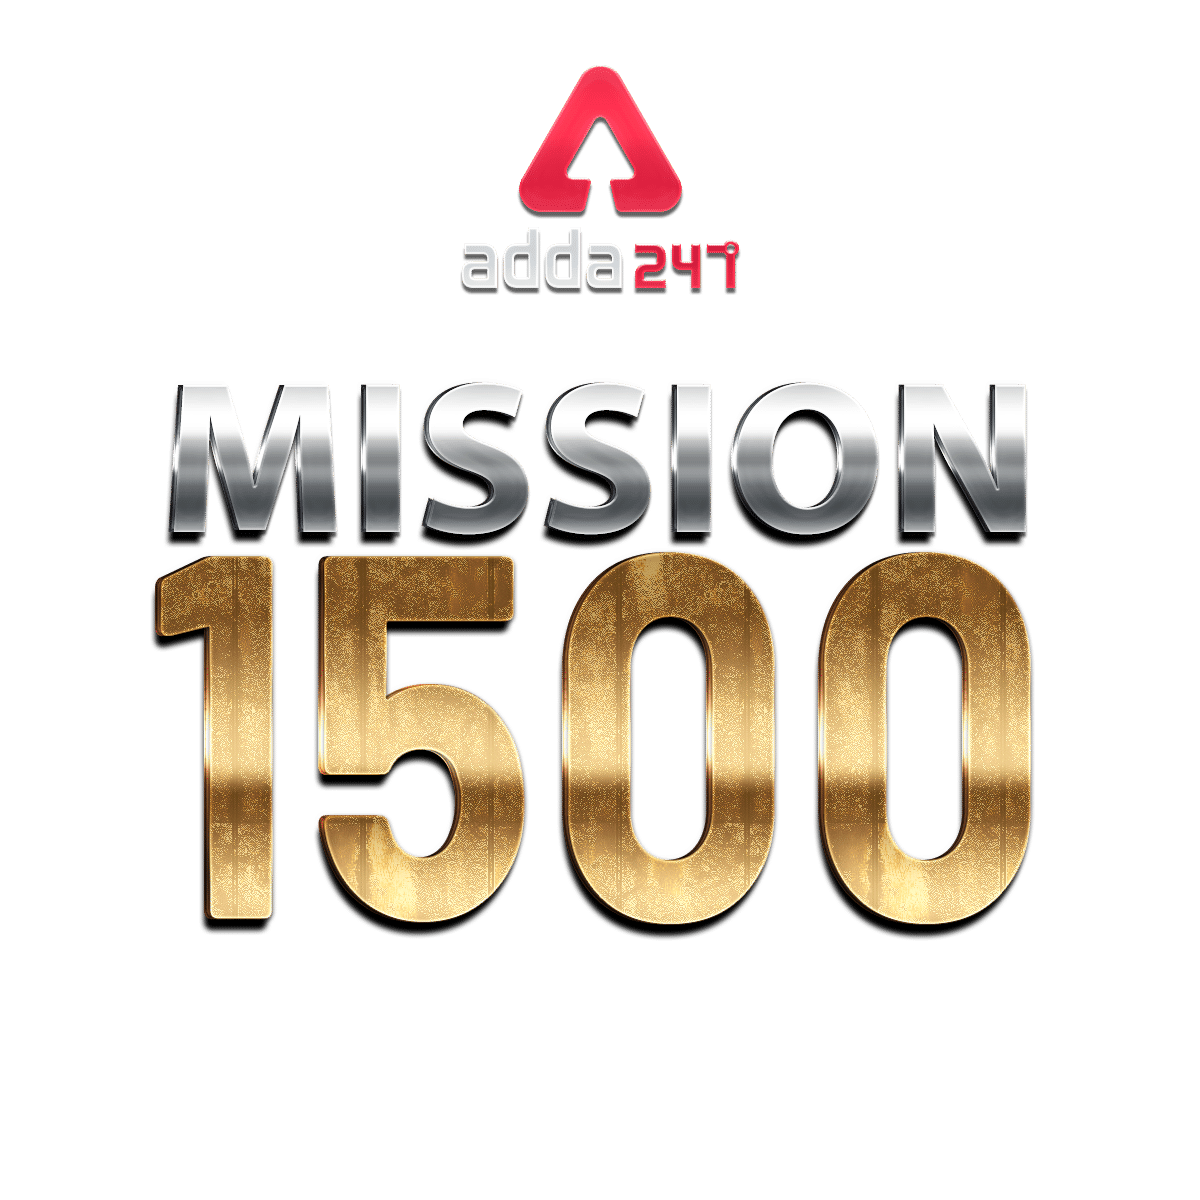 MISSION 1500 — LAUNCHING ON 27 NOVEMBER ? 7 AM | GOVT. JOB ASPIRANTS_50.1